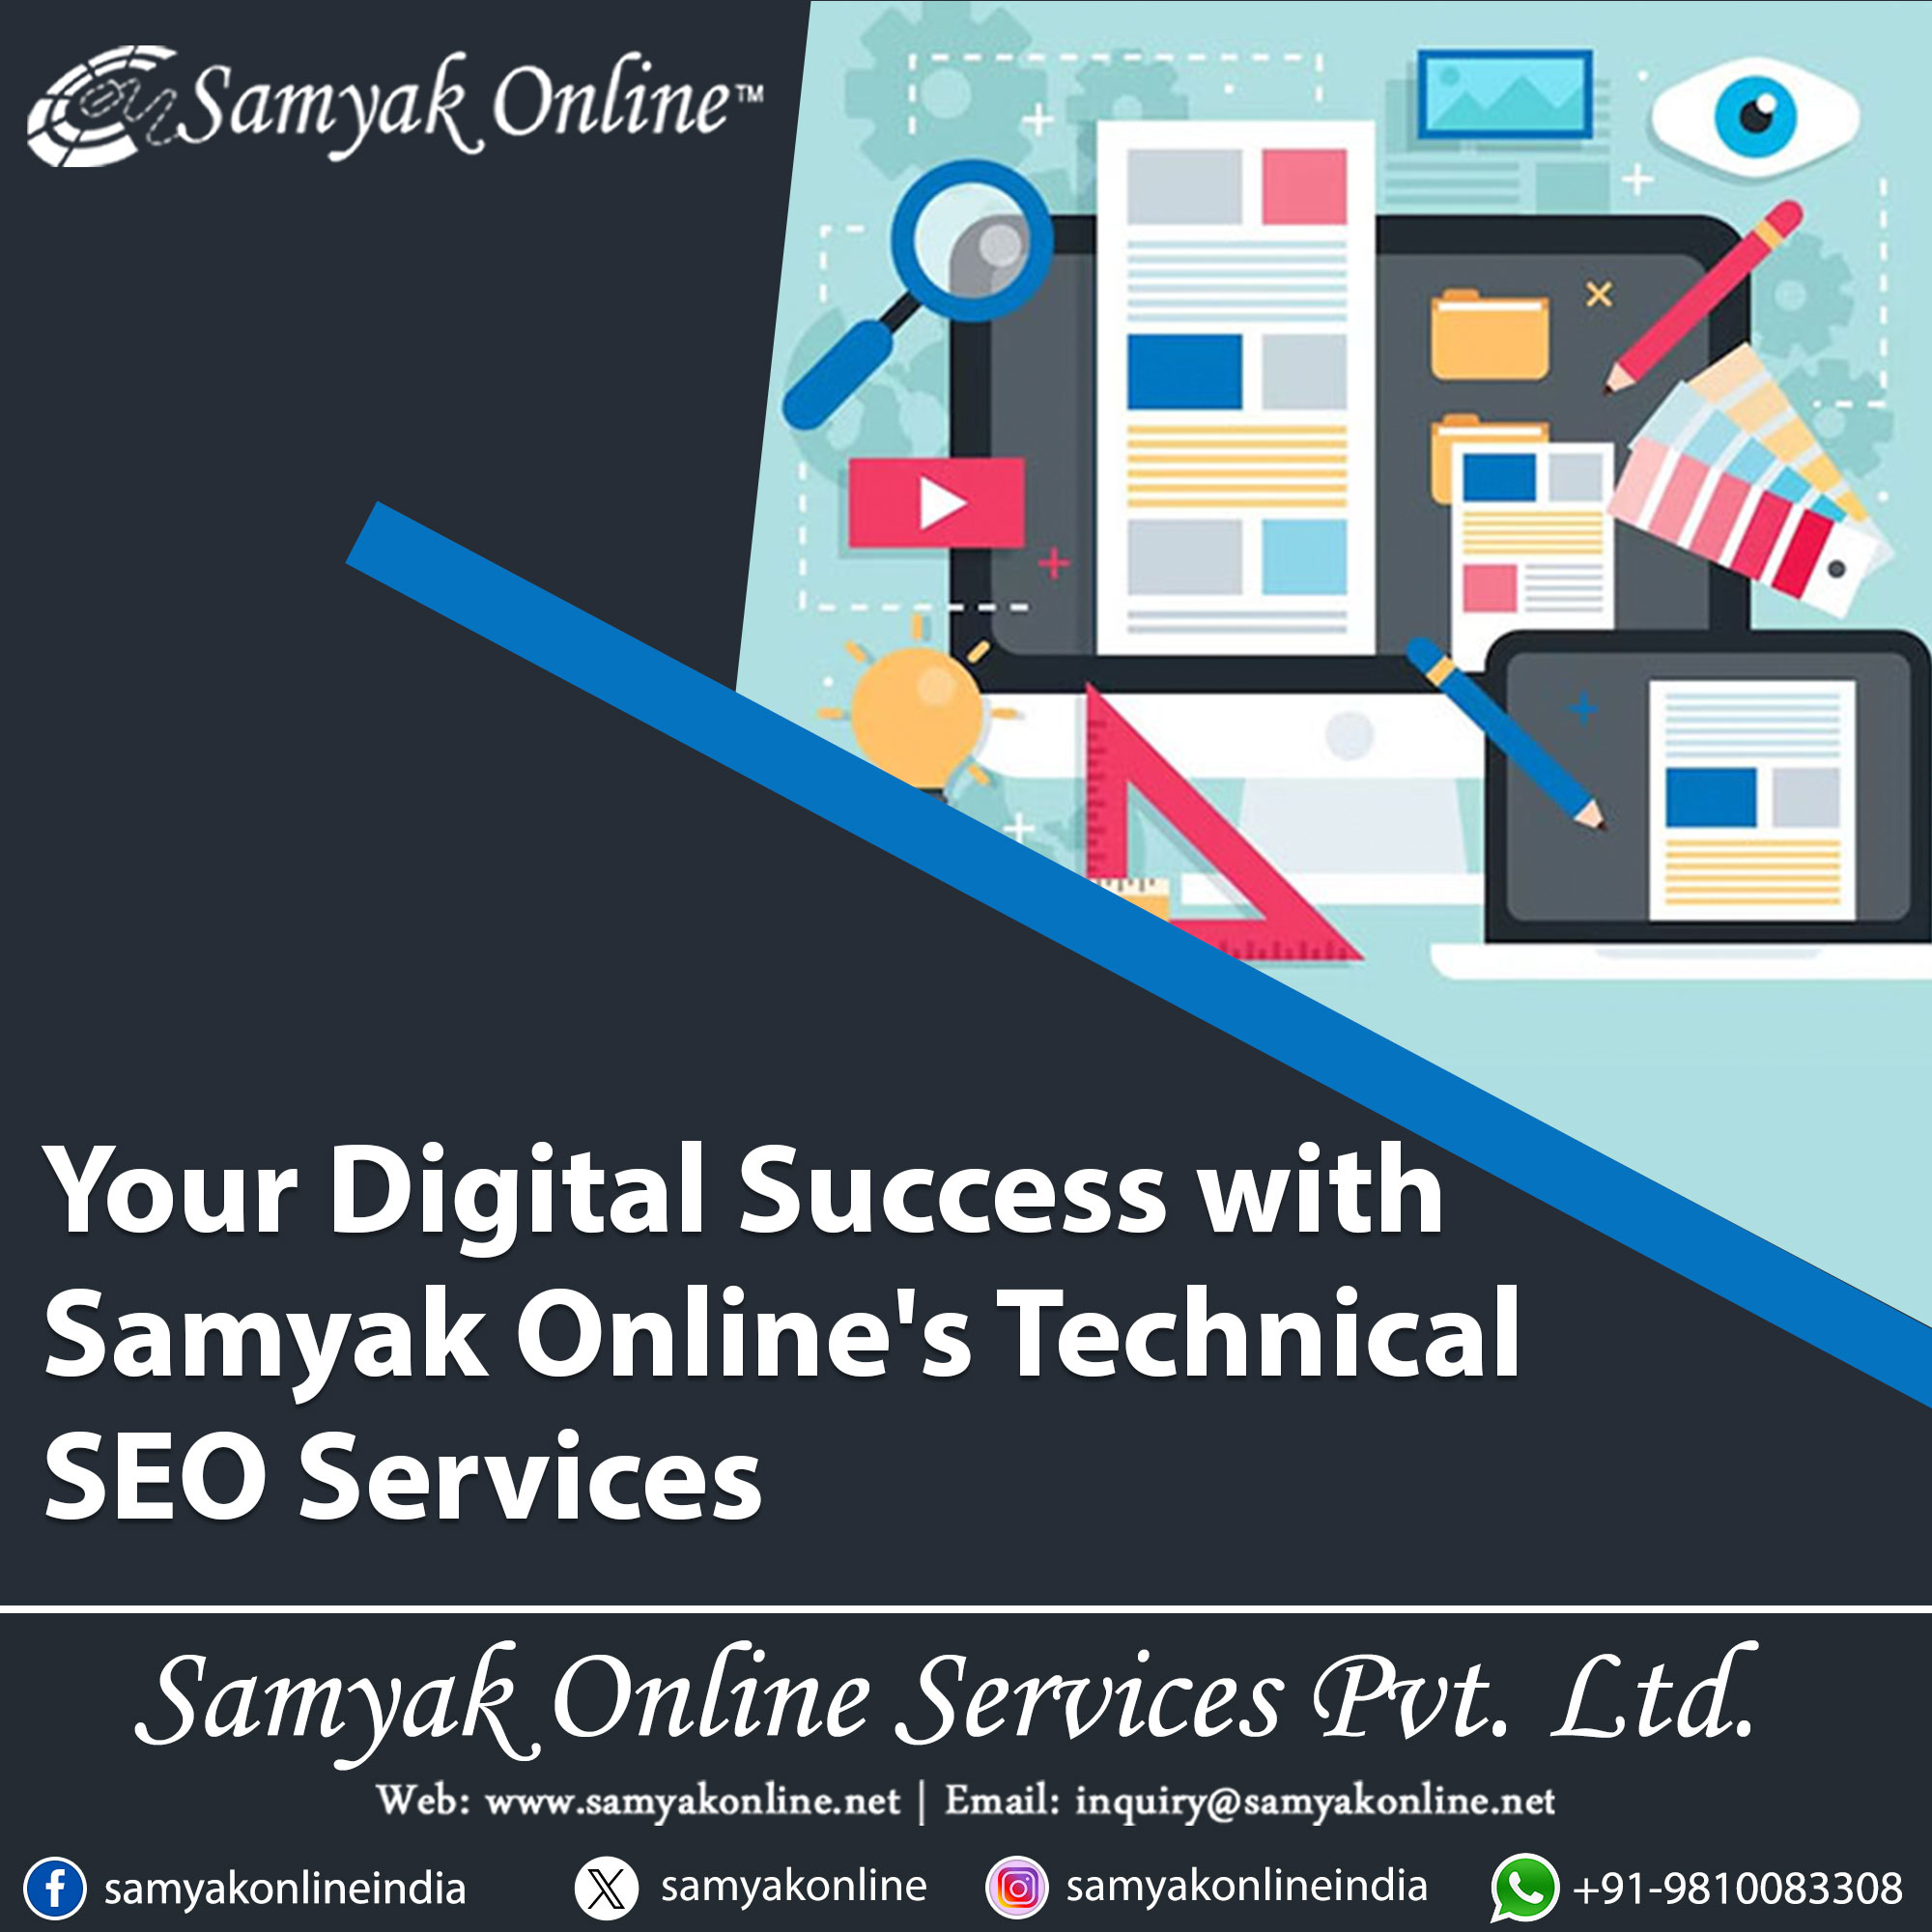 Your Digital Success with
Samyak Online's Technical
SEO Services

Samyak Online Services Pvt. Ltd.

Web: www.samyakonline.net | Email: inquiry@samyakonline.net
® samyakonlineindia [X] samyakonline samyakonlineindia © +91-9810083308